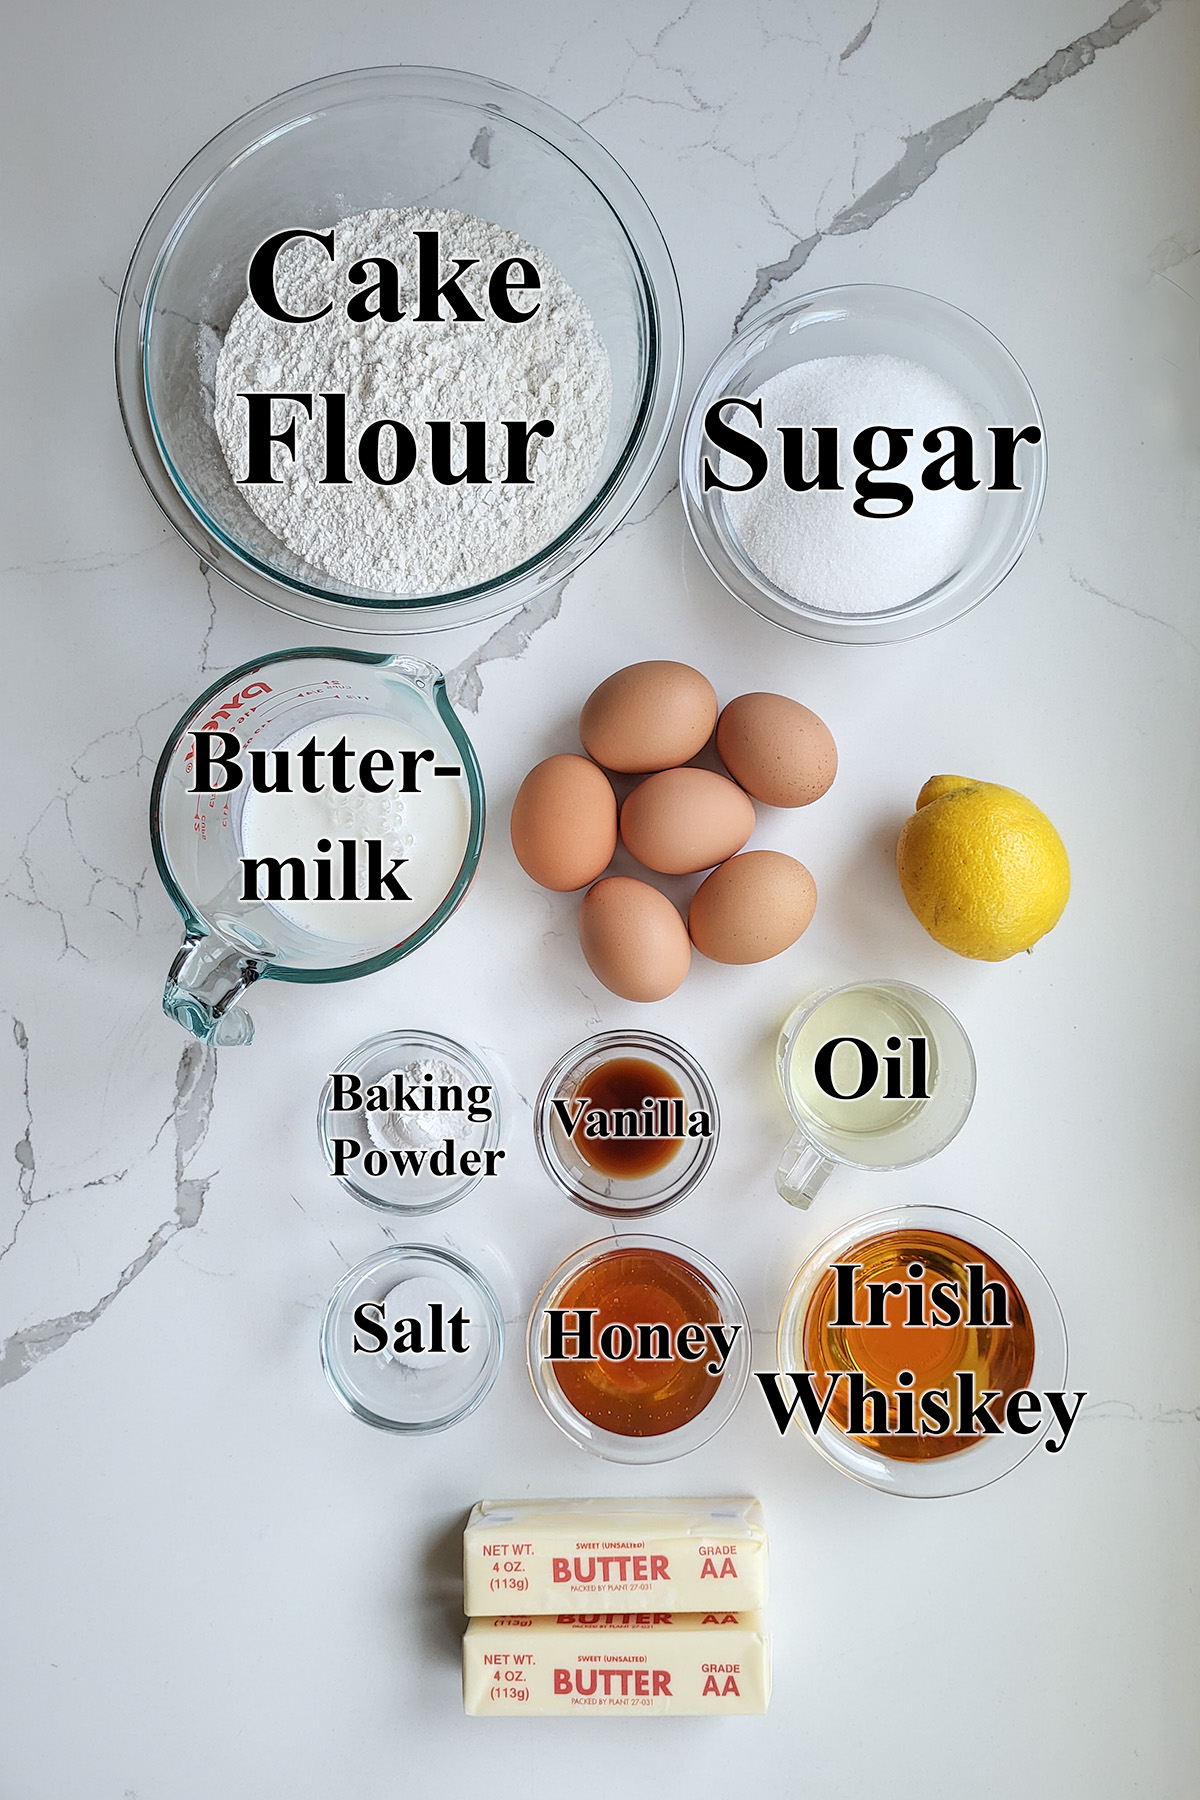 Ingredients for Irish Whiskey cake in glass bowls.